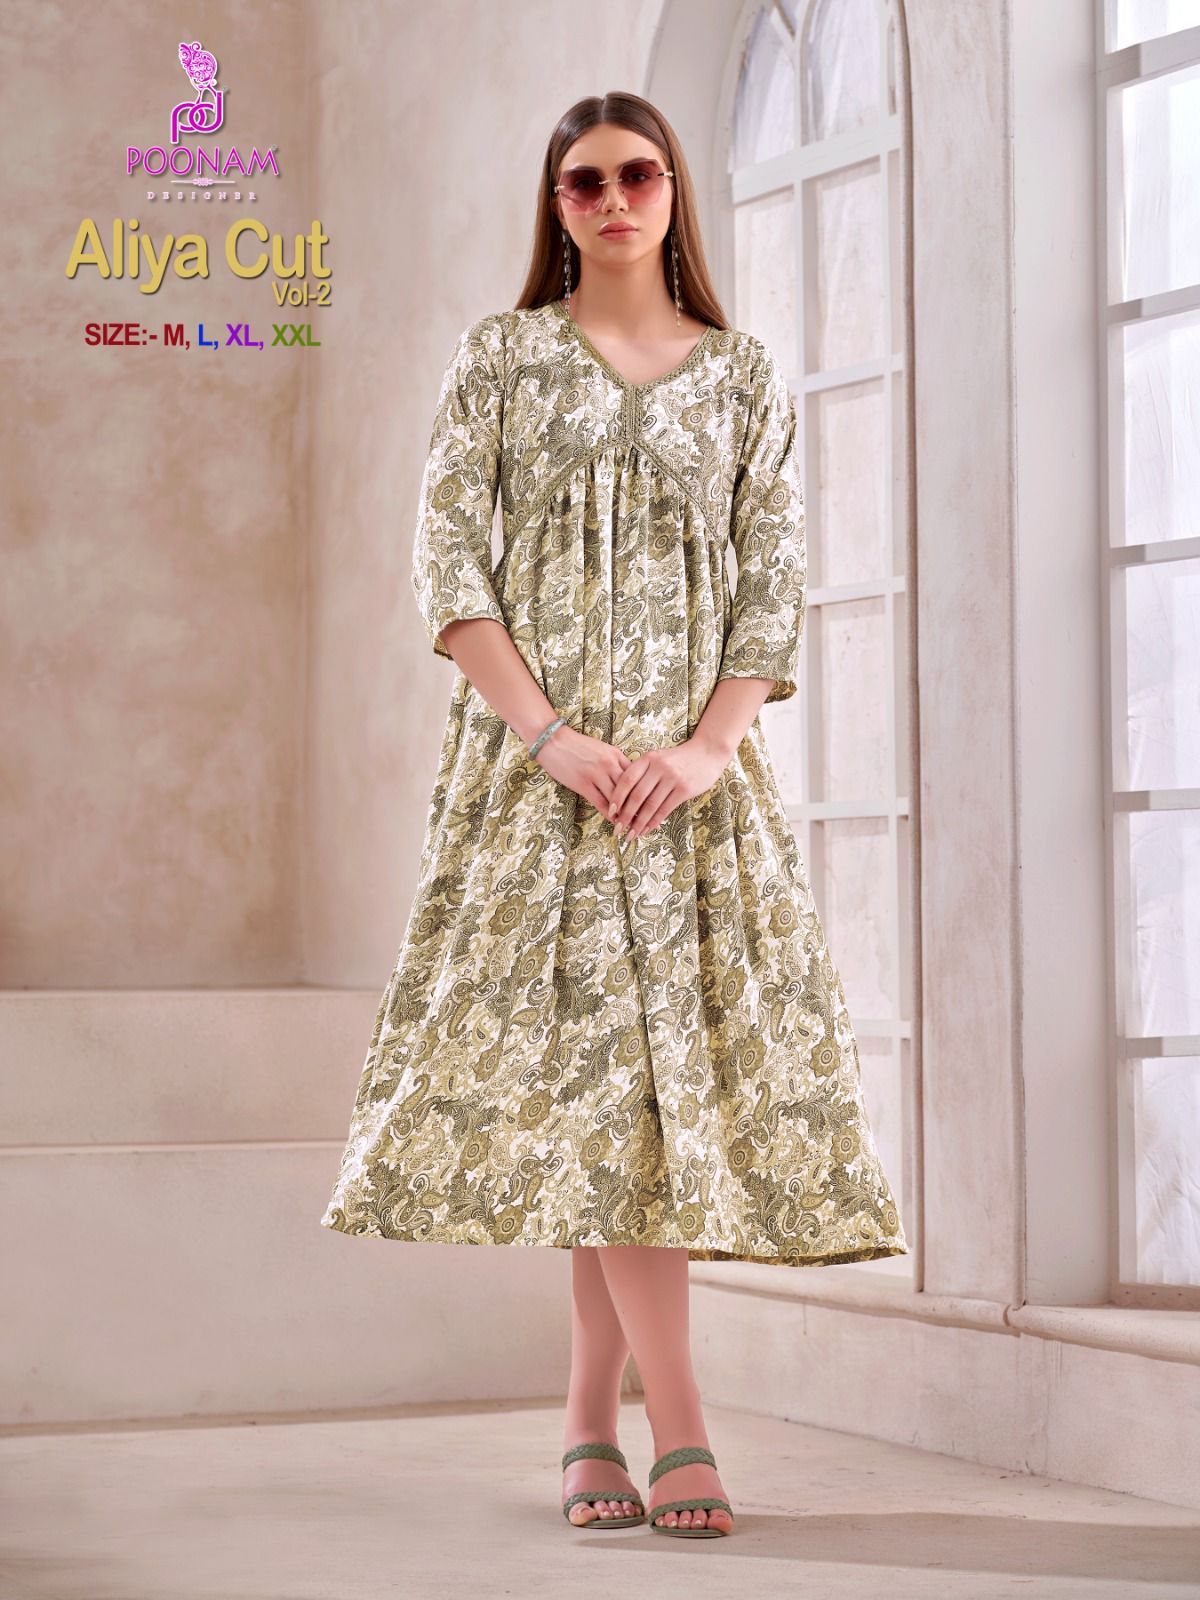 Poonam Designer Aliya Cut 1003